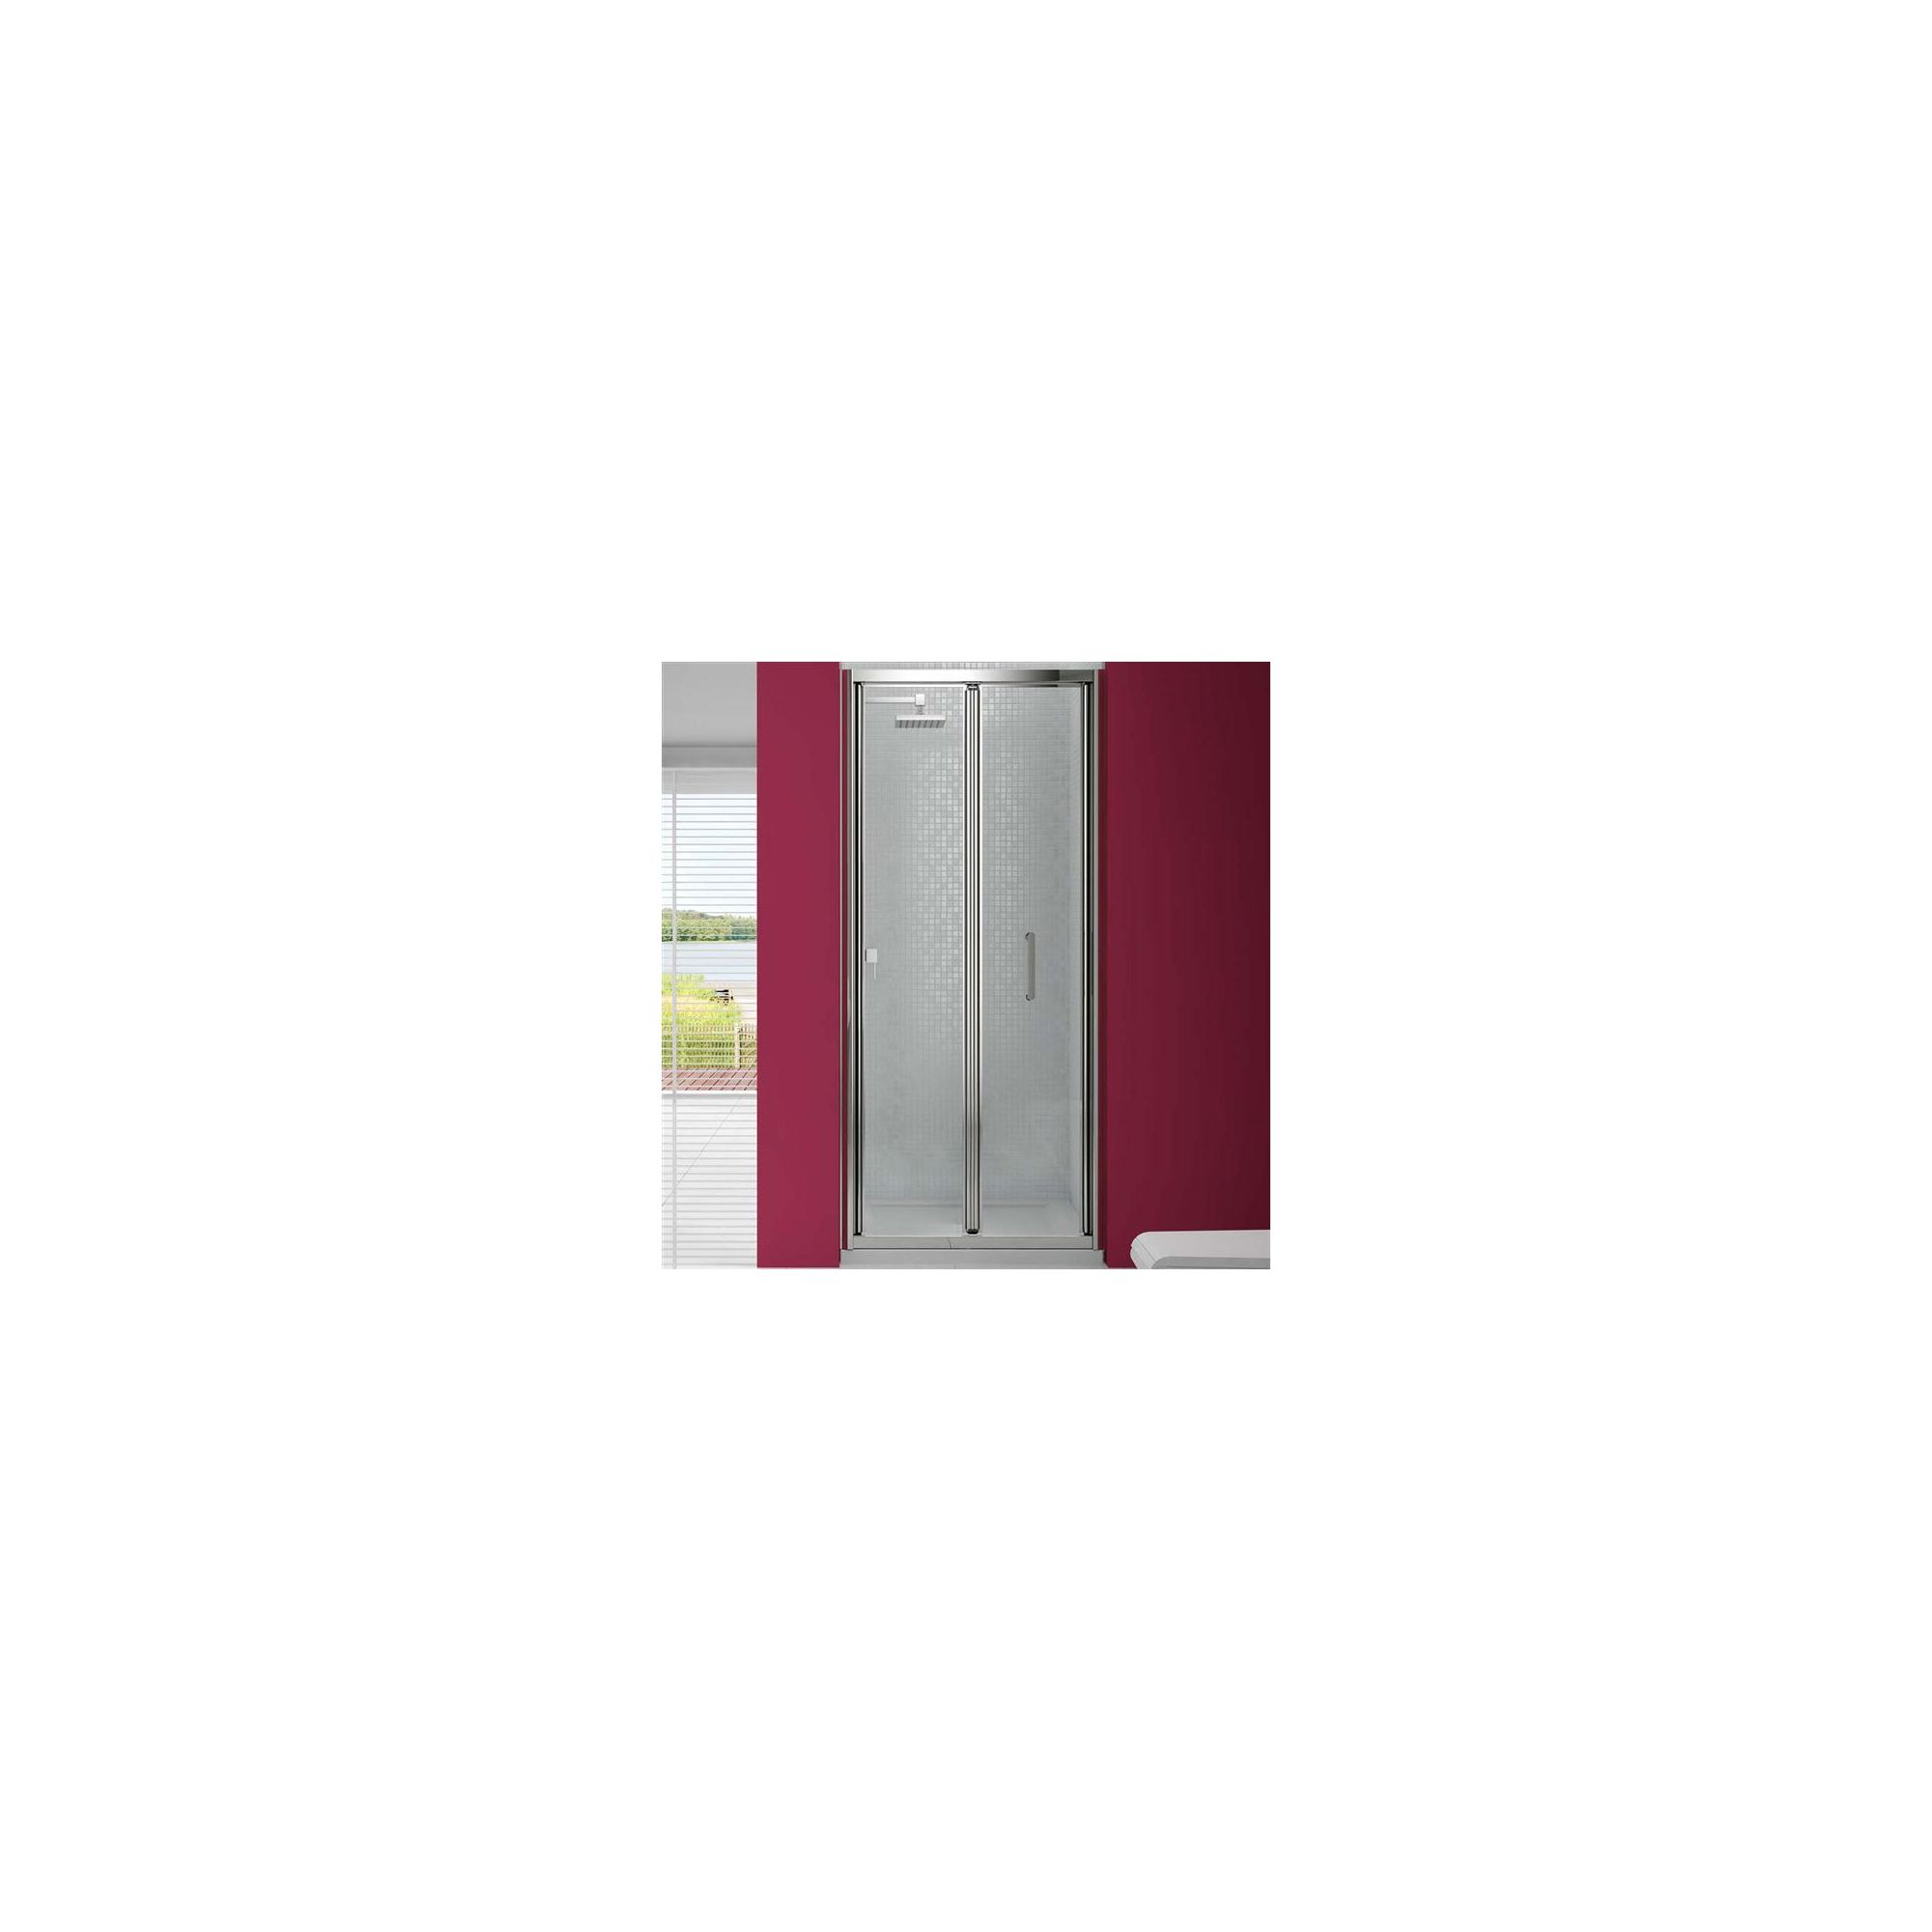 Merlyn Vivid Six Bi-Fold Door Shower Enclosure, 800mm x 800mm, Low Profile Tray, 6mm Glass at Tesco Direct